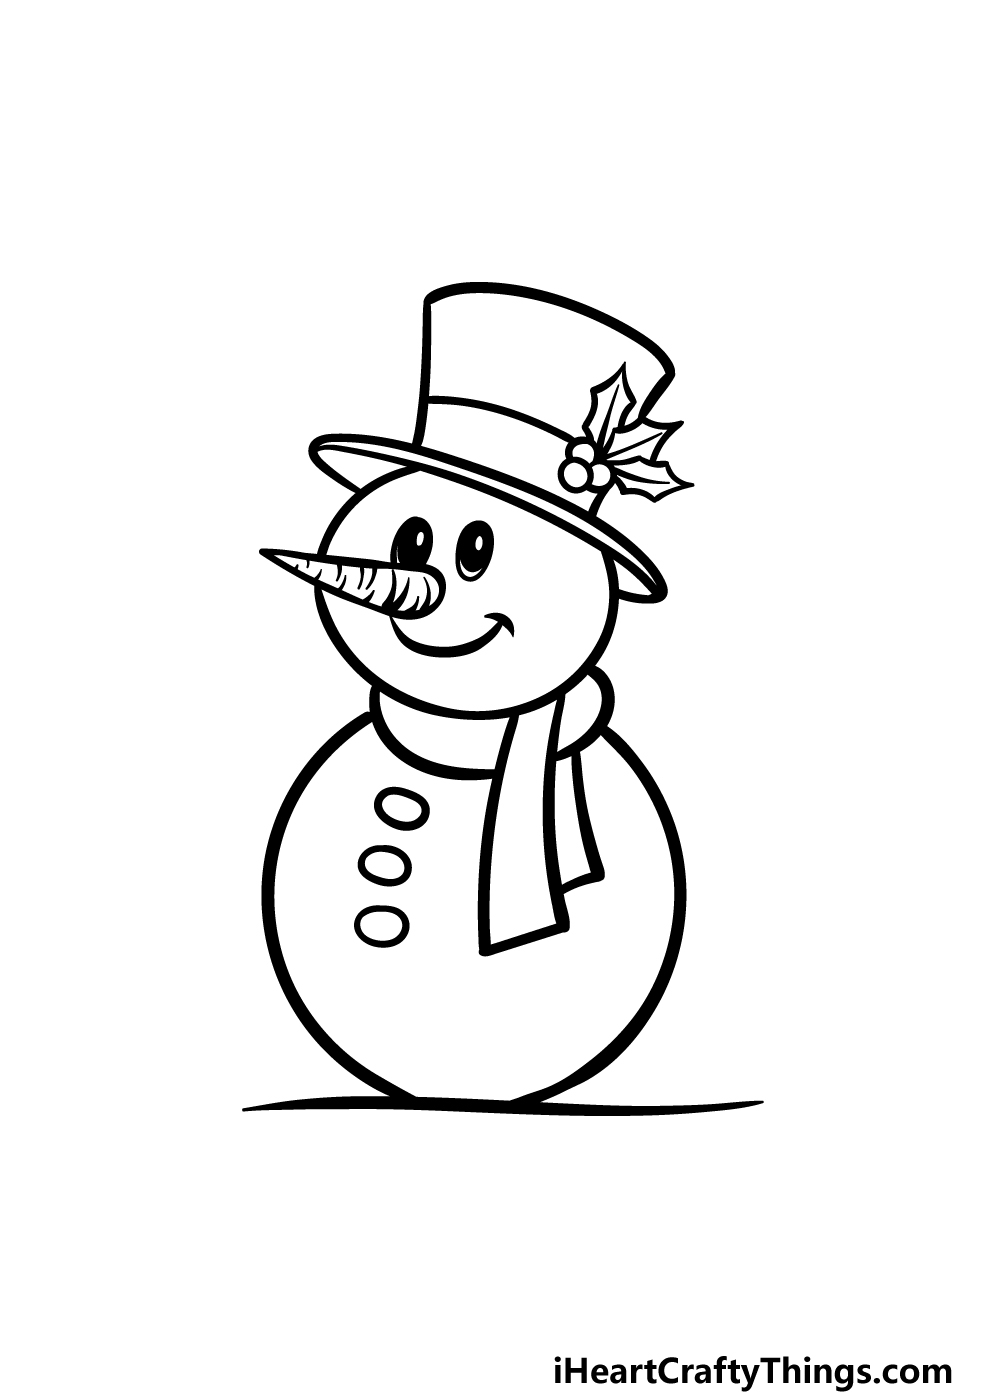 how to draw a cartoon snowman step 4